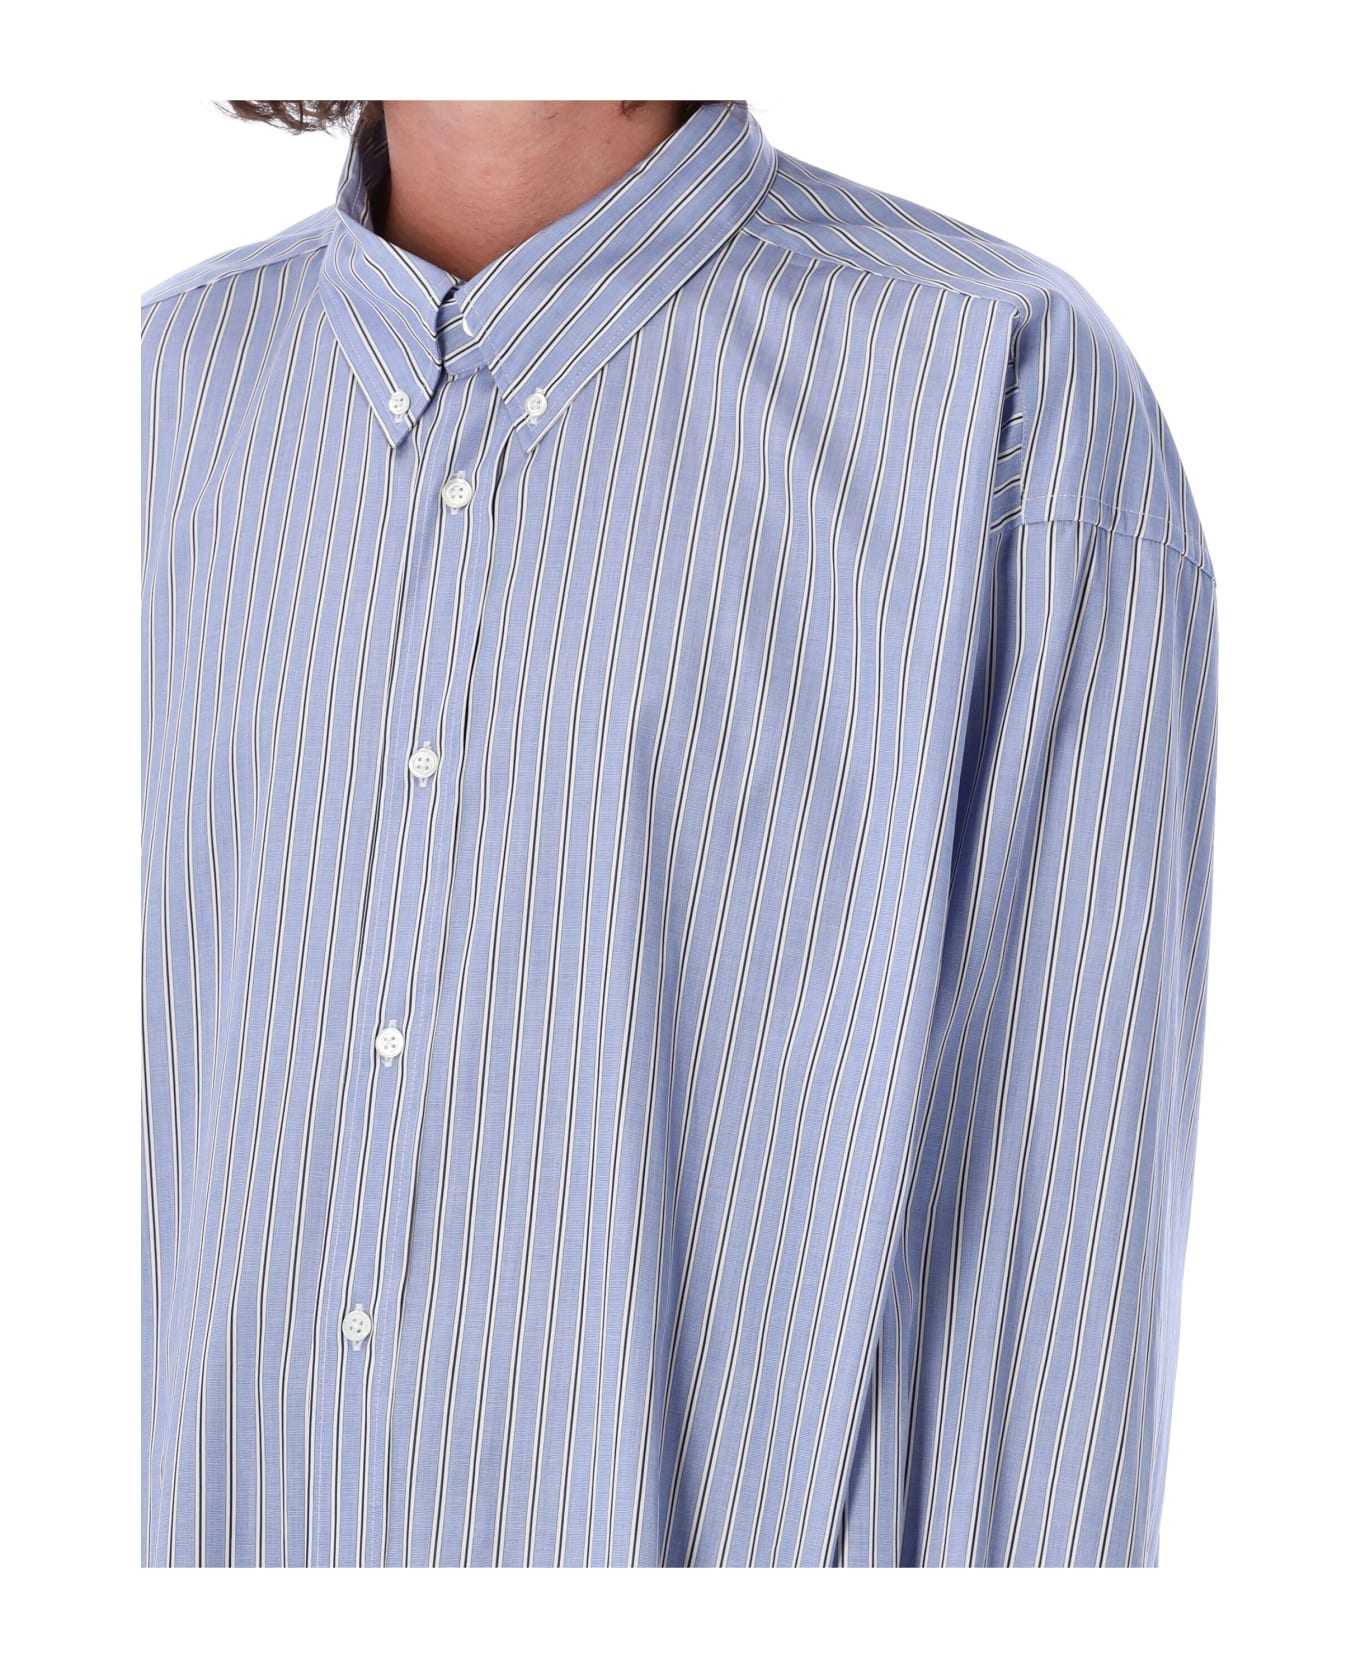 Maison Margiela Striped Shirt - BLUE STRIPES